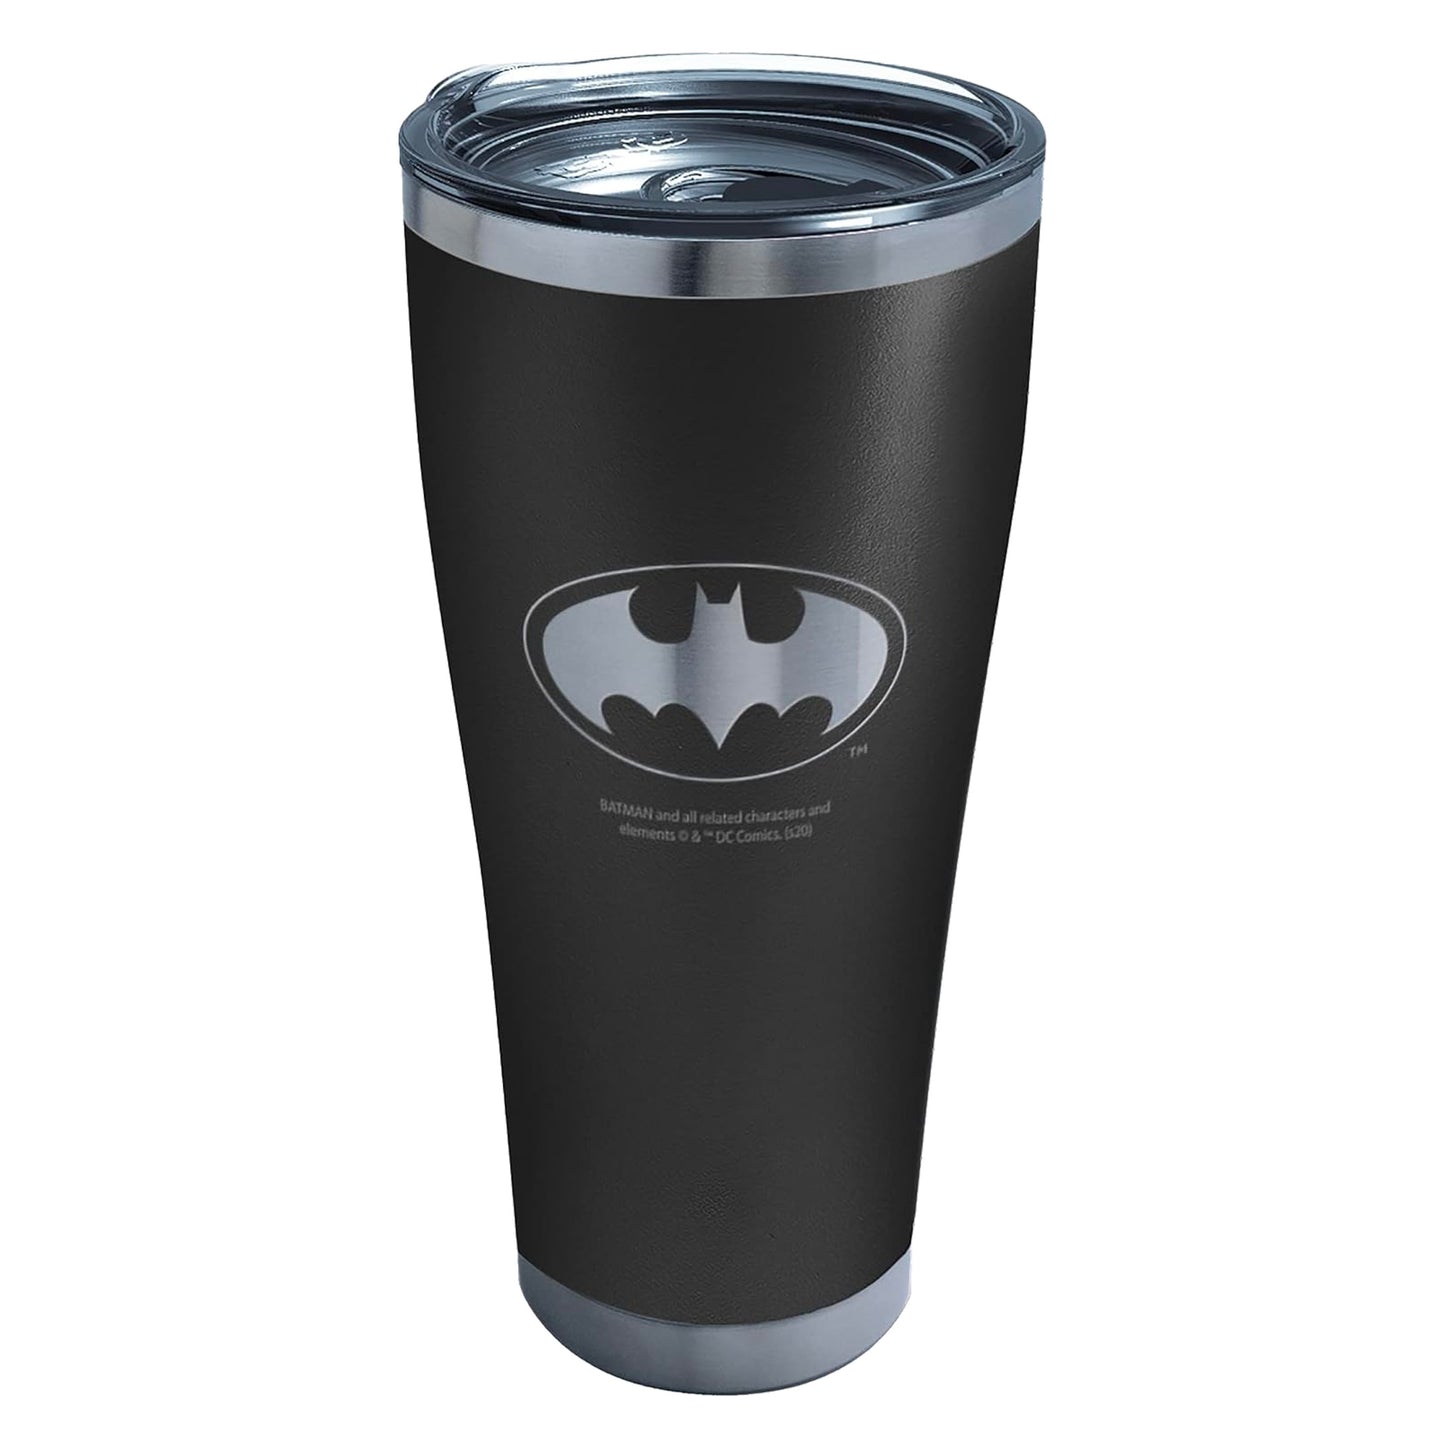 Batman Stainless Steel Travel Mug 30oz by Tervis